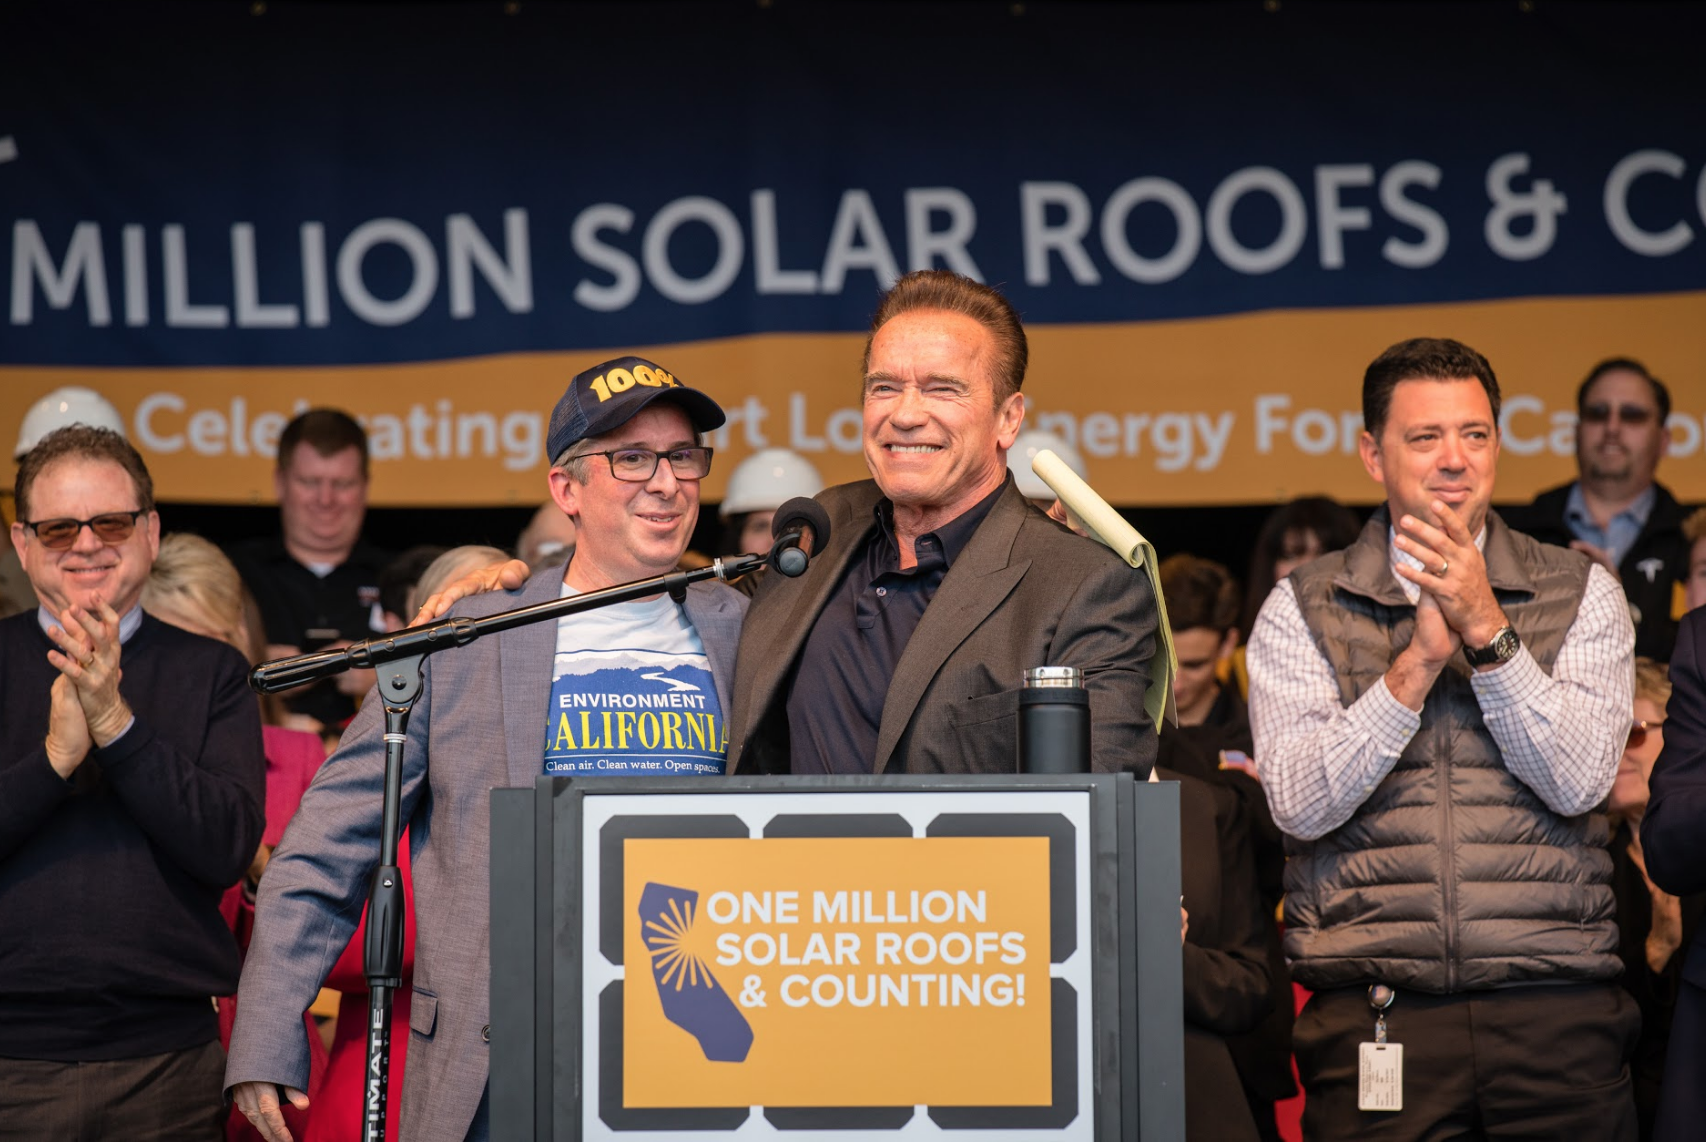 Environment California's Dan Jacobson celebrates reaching the Million Solar Roofs milestone alongside former Governor Schwarzenegger (photo credit: Tomas Ovalle)